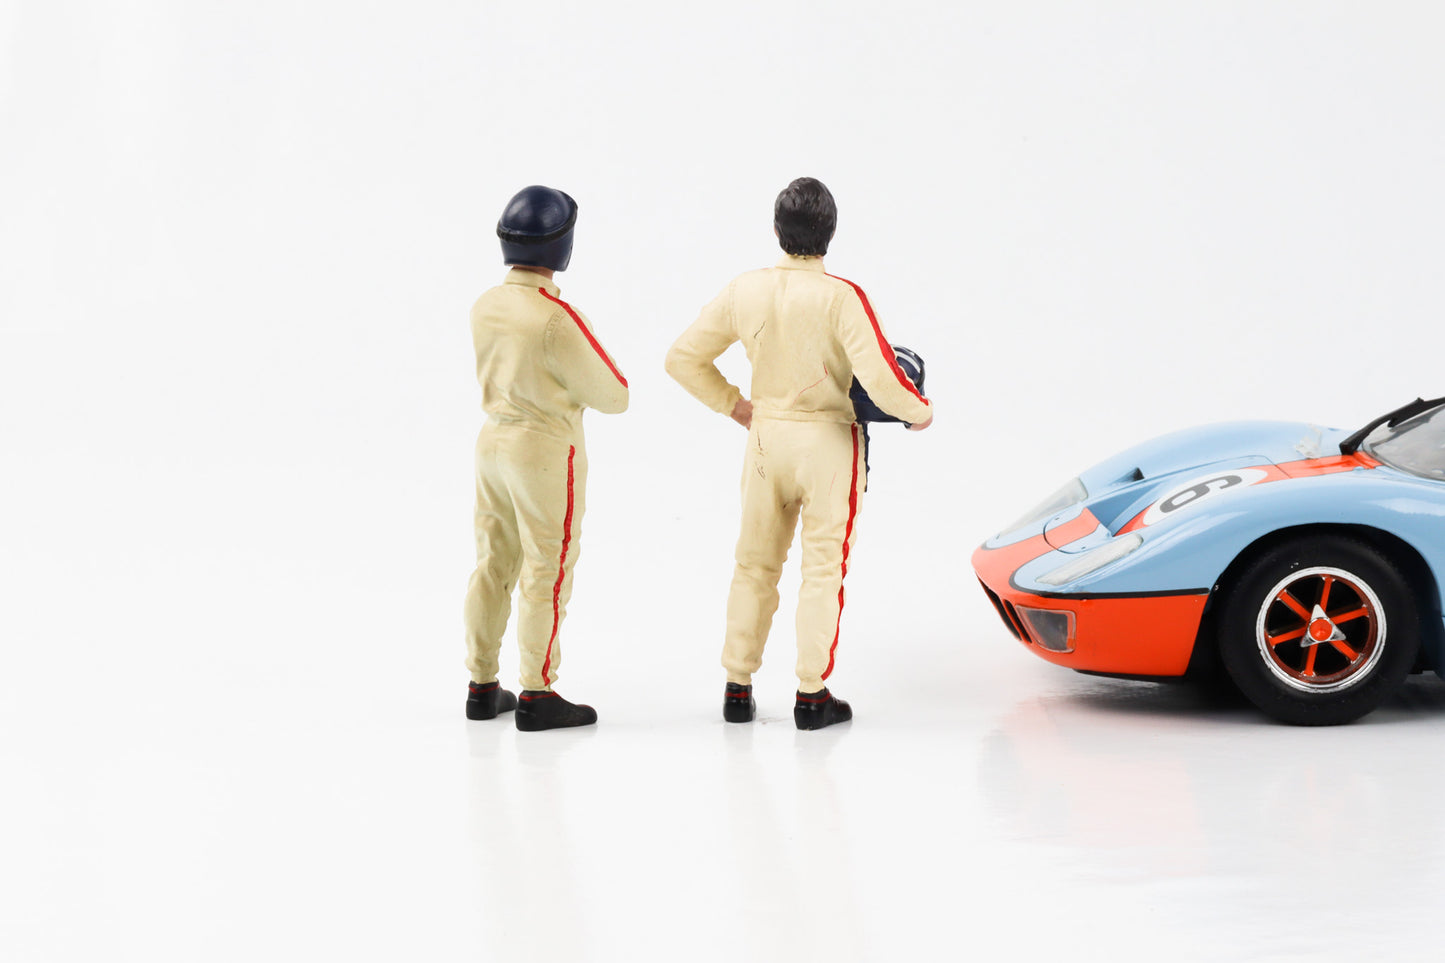 1:18 Figure Le Mans Racing Legend 60s Set 2 figures driver beige American diorama